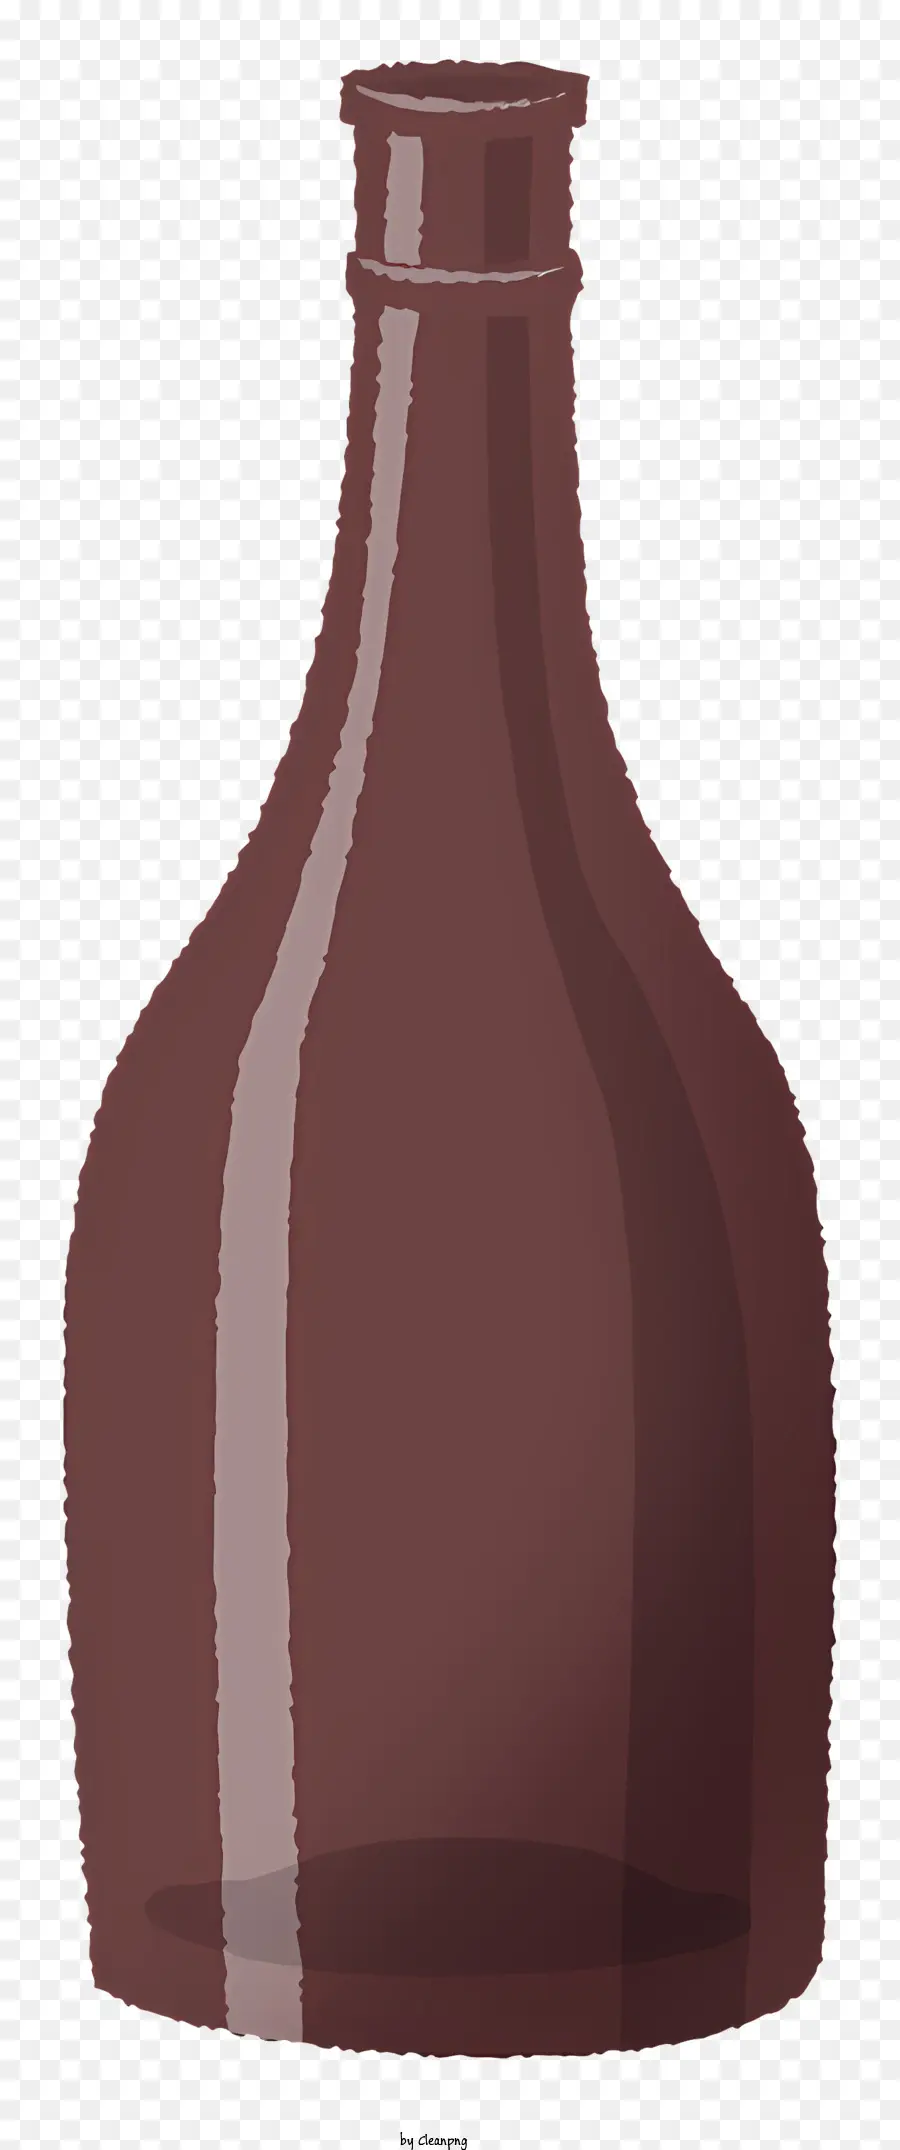 bottle large brown bottle narrow neck bottle wide mouth bottle glass bottle